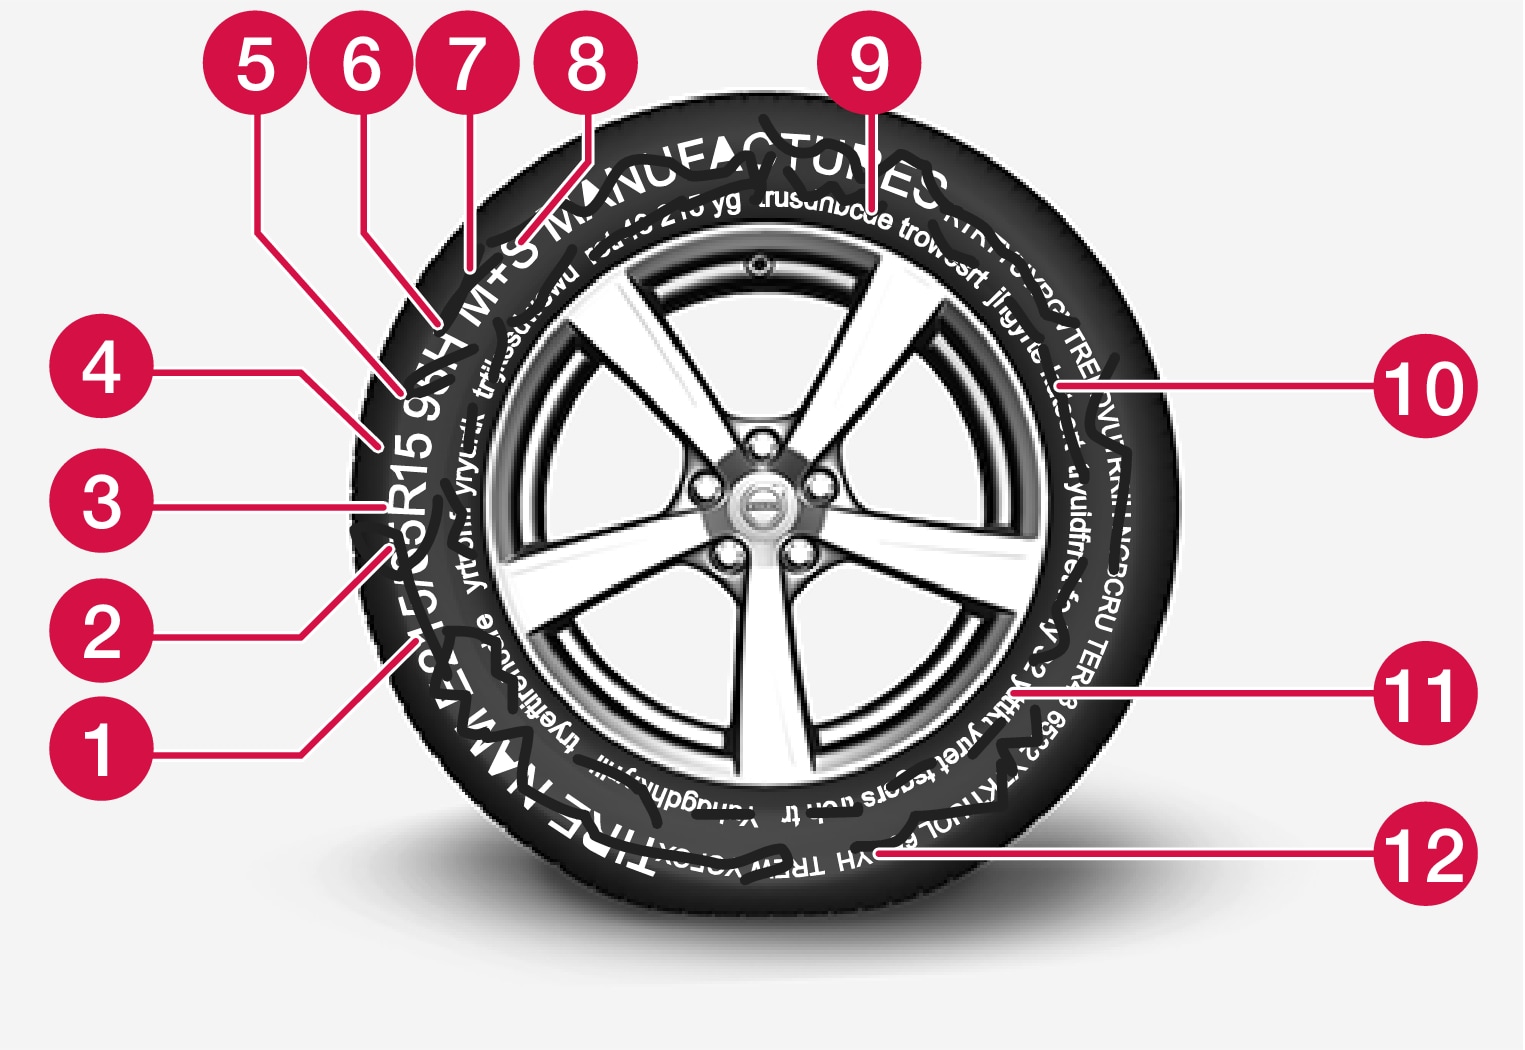 P5-1507-USA-tire sidewall designations